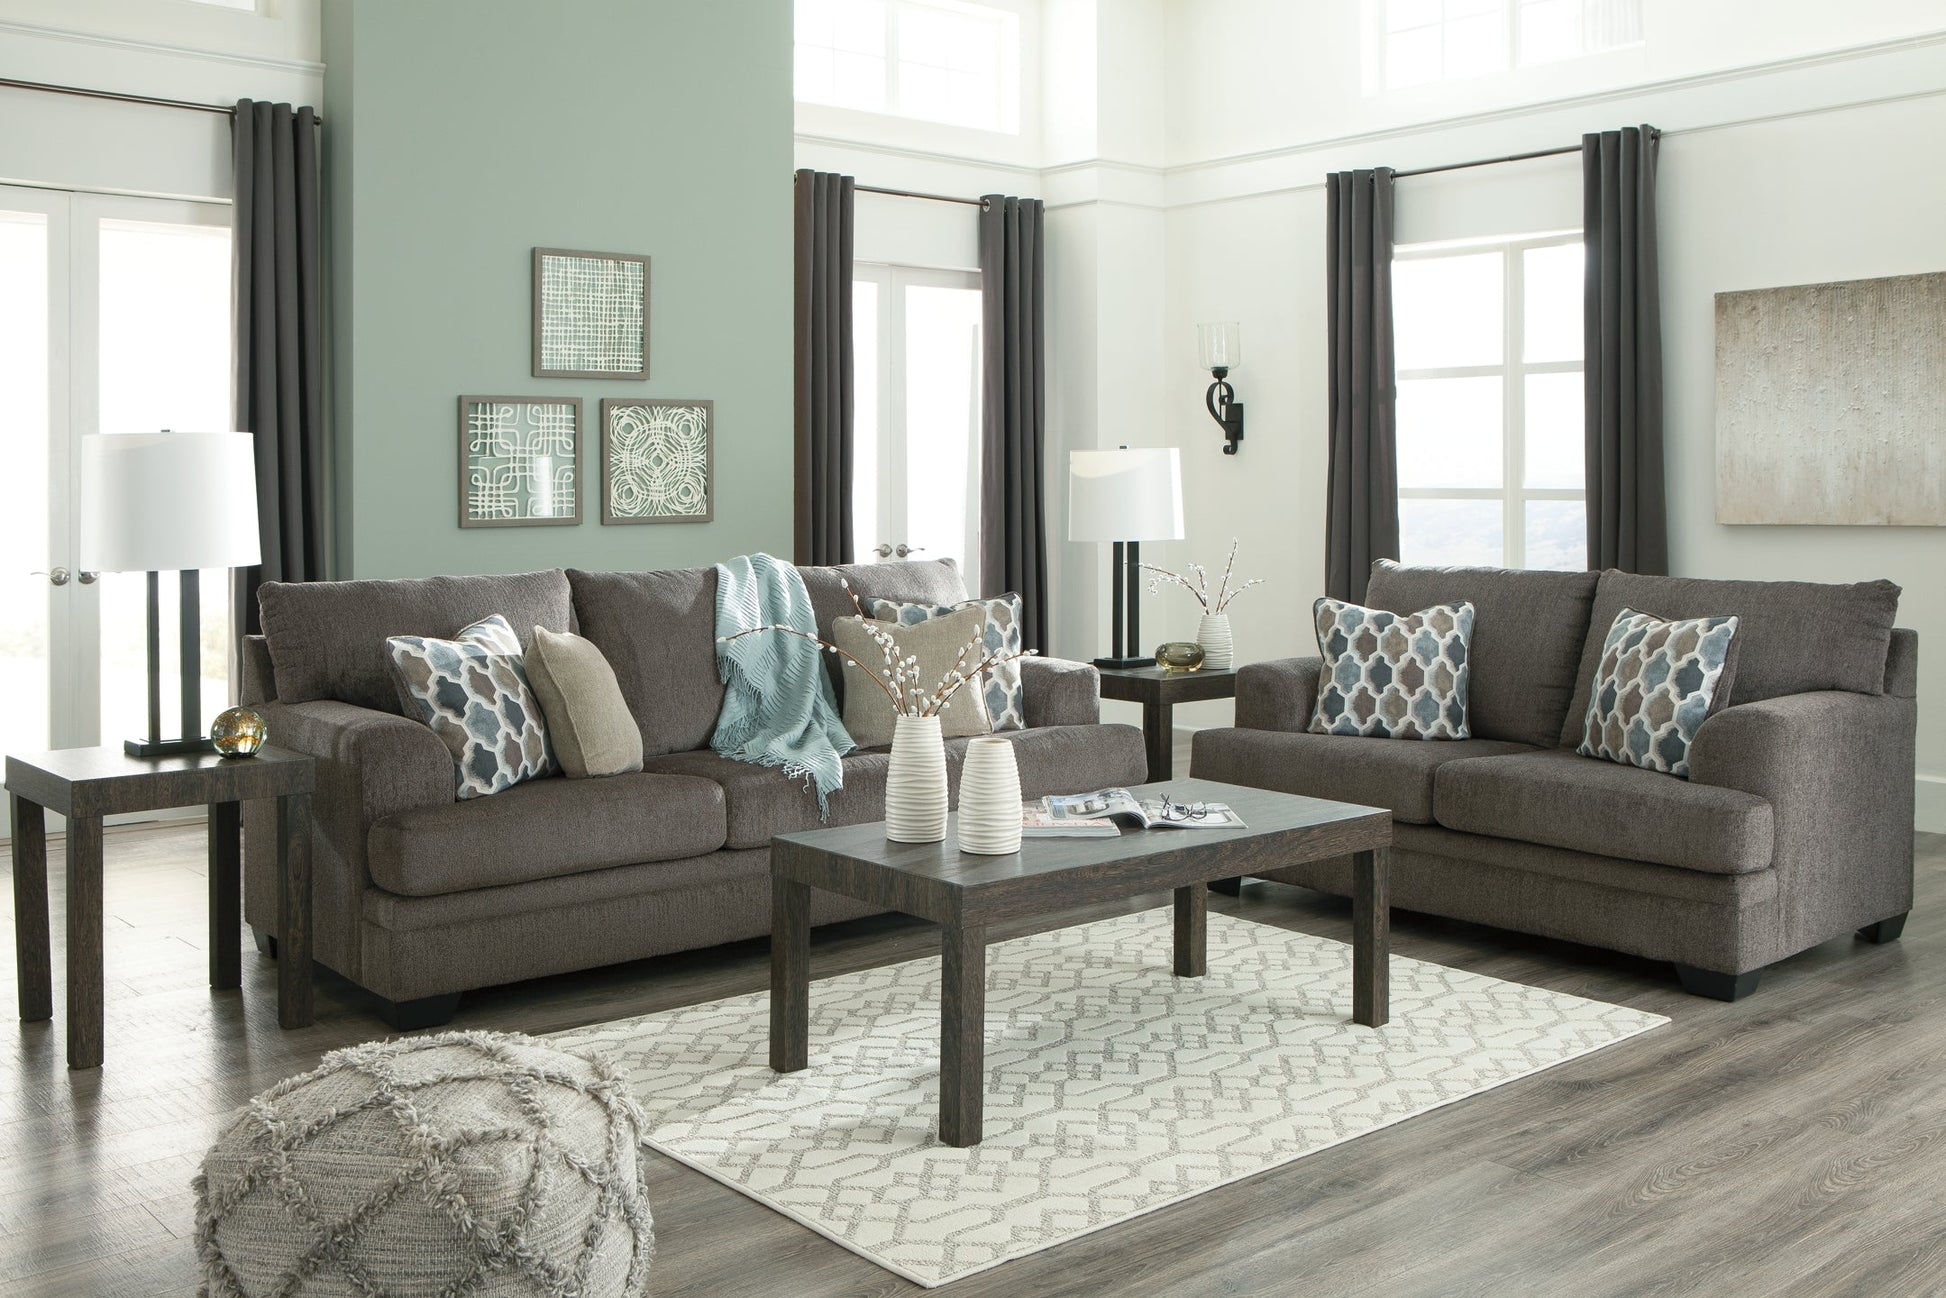 Dorsten Queen Sofa Sleeper at Cloud 9 Mattress & Furniture furniture, home furnishing, home decor